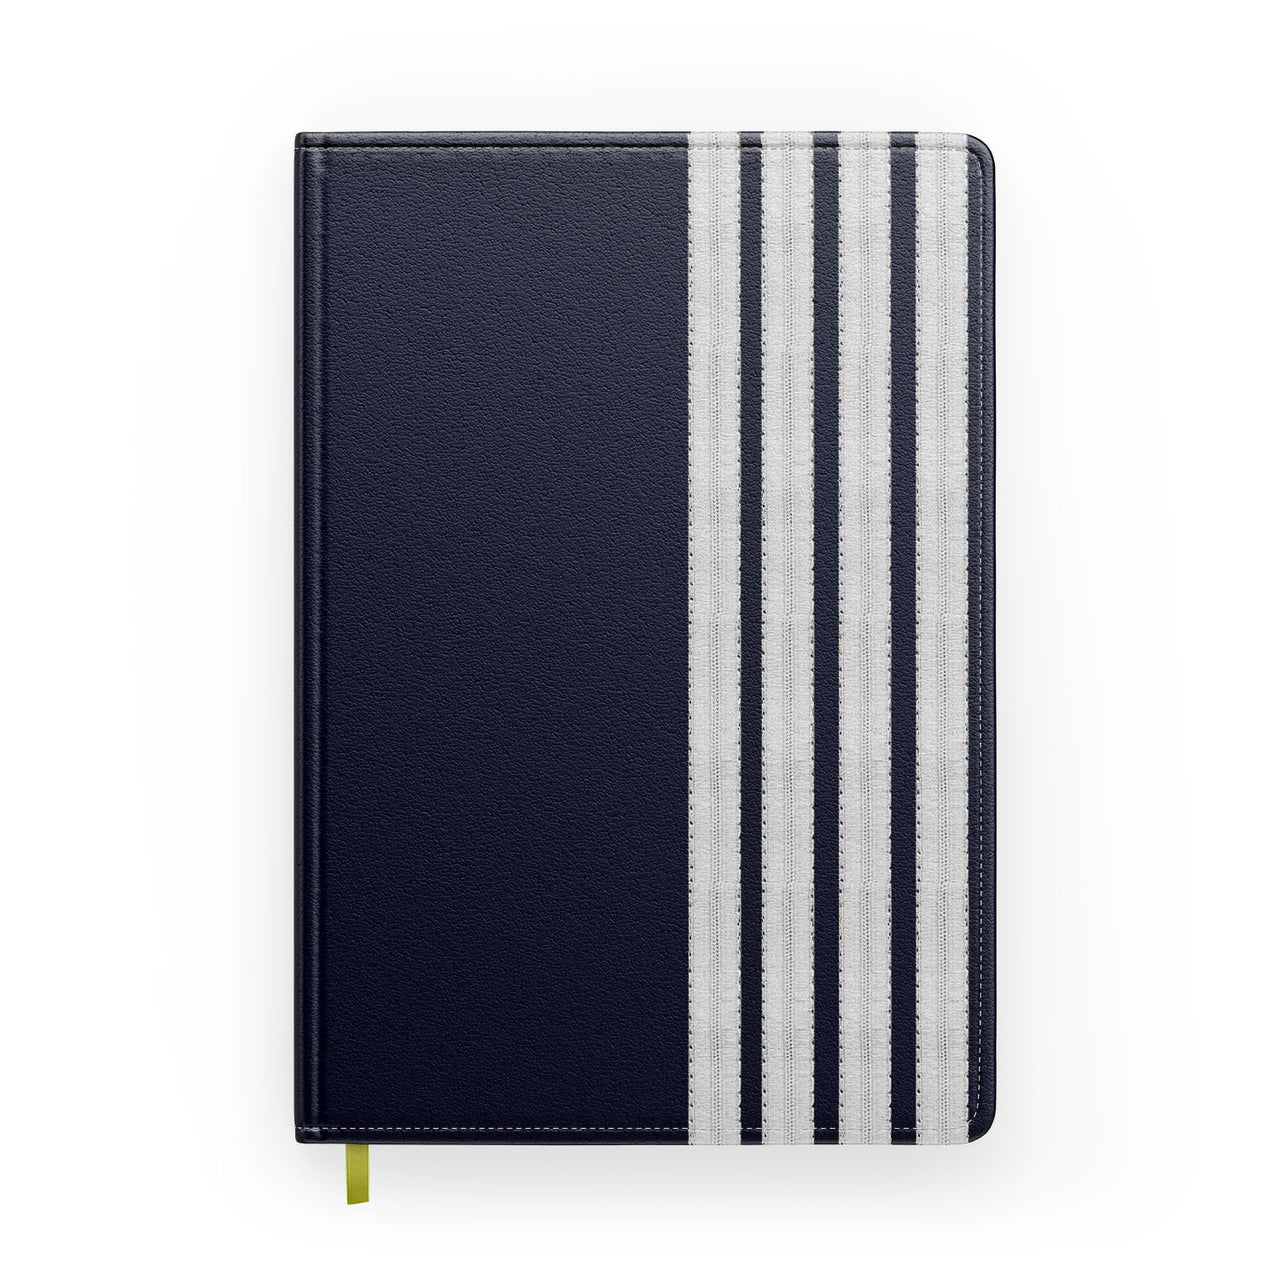 Special "SILVER" Pilot Epaulettes (4,3,2 Lines) Designed Notebooks